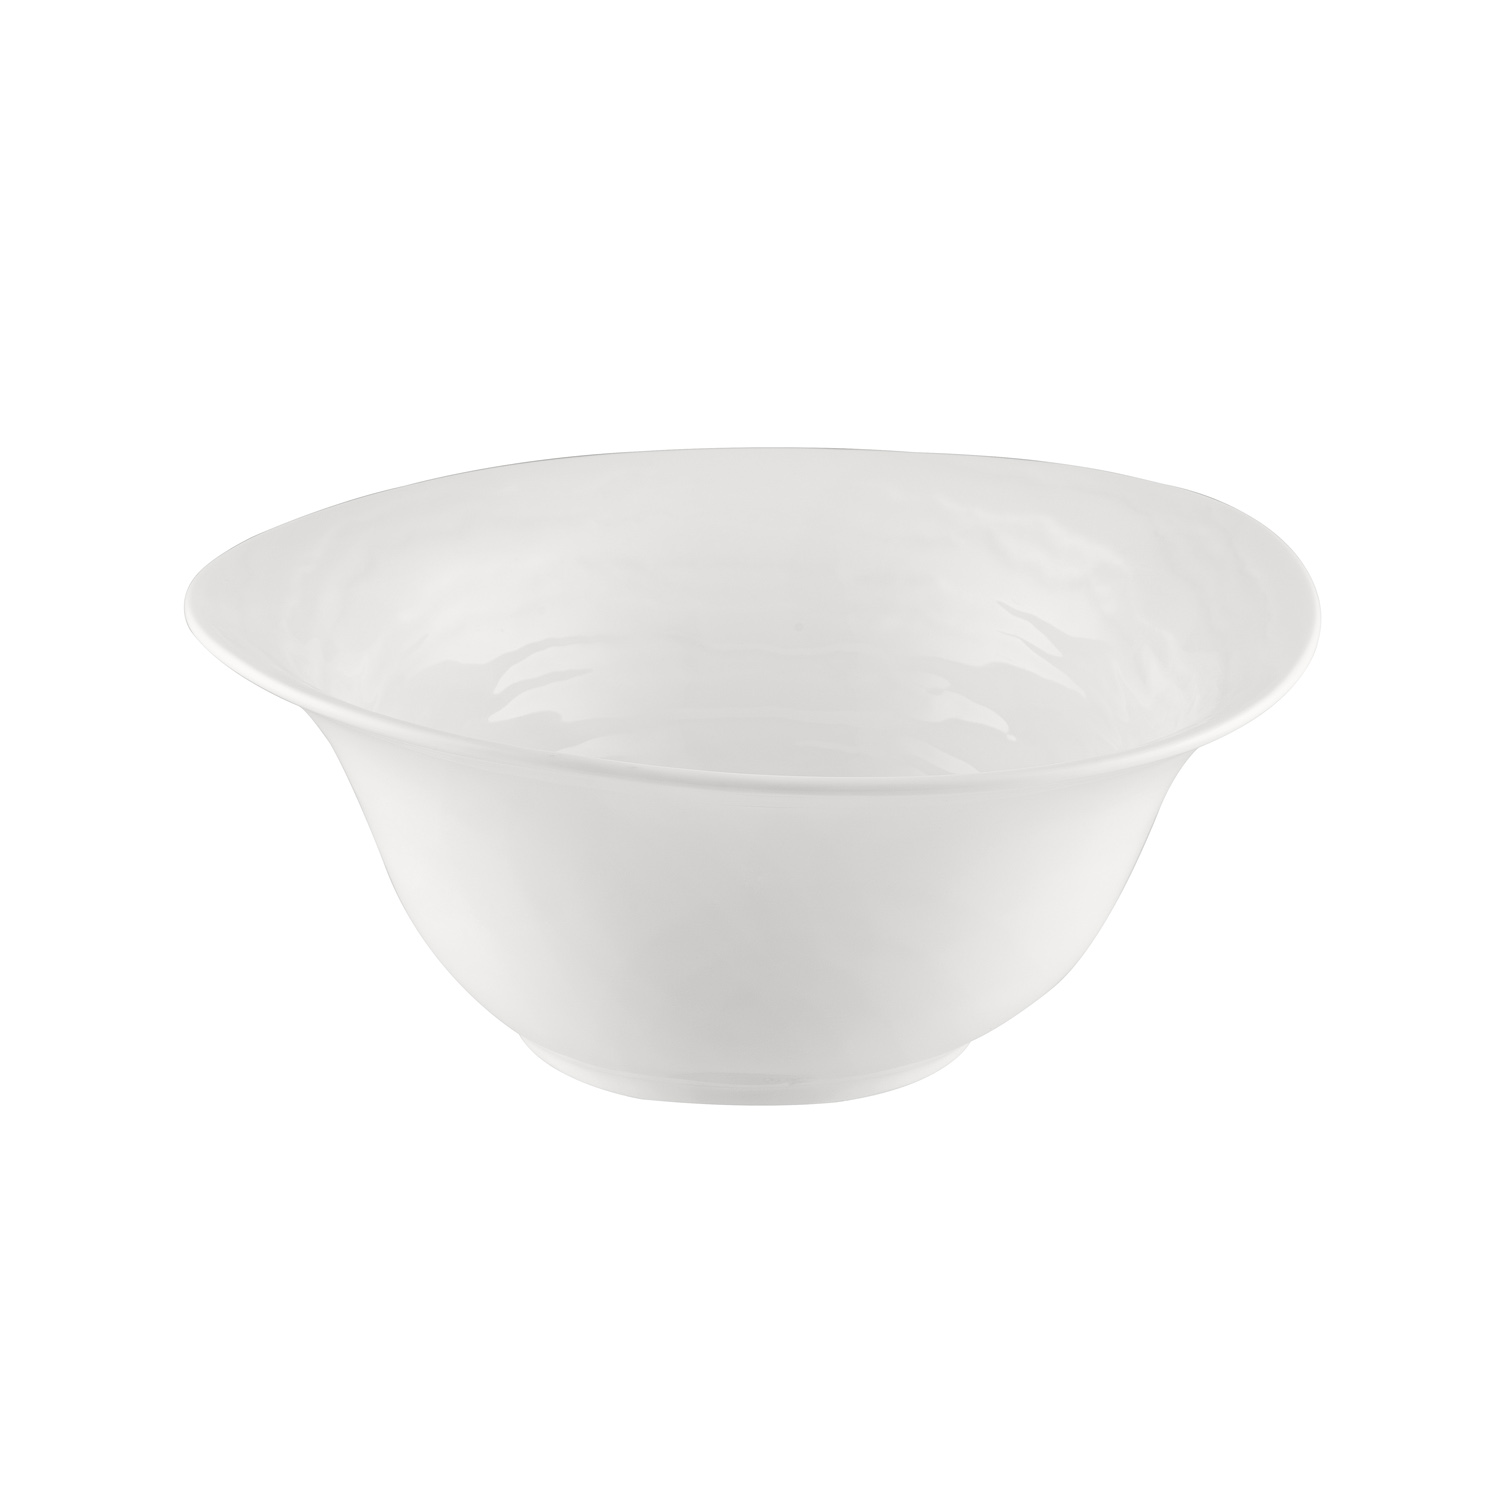 CAC China BHM-MB10 Bahamas Bone White Porcelain Salad/Pasta Bowl 48.5 oz., 10" - 1 dozen